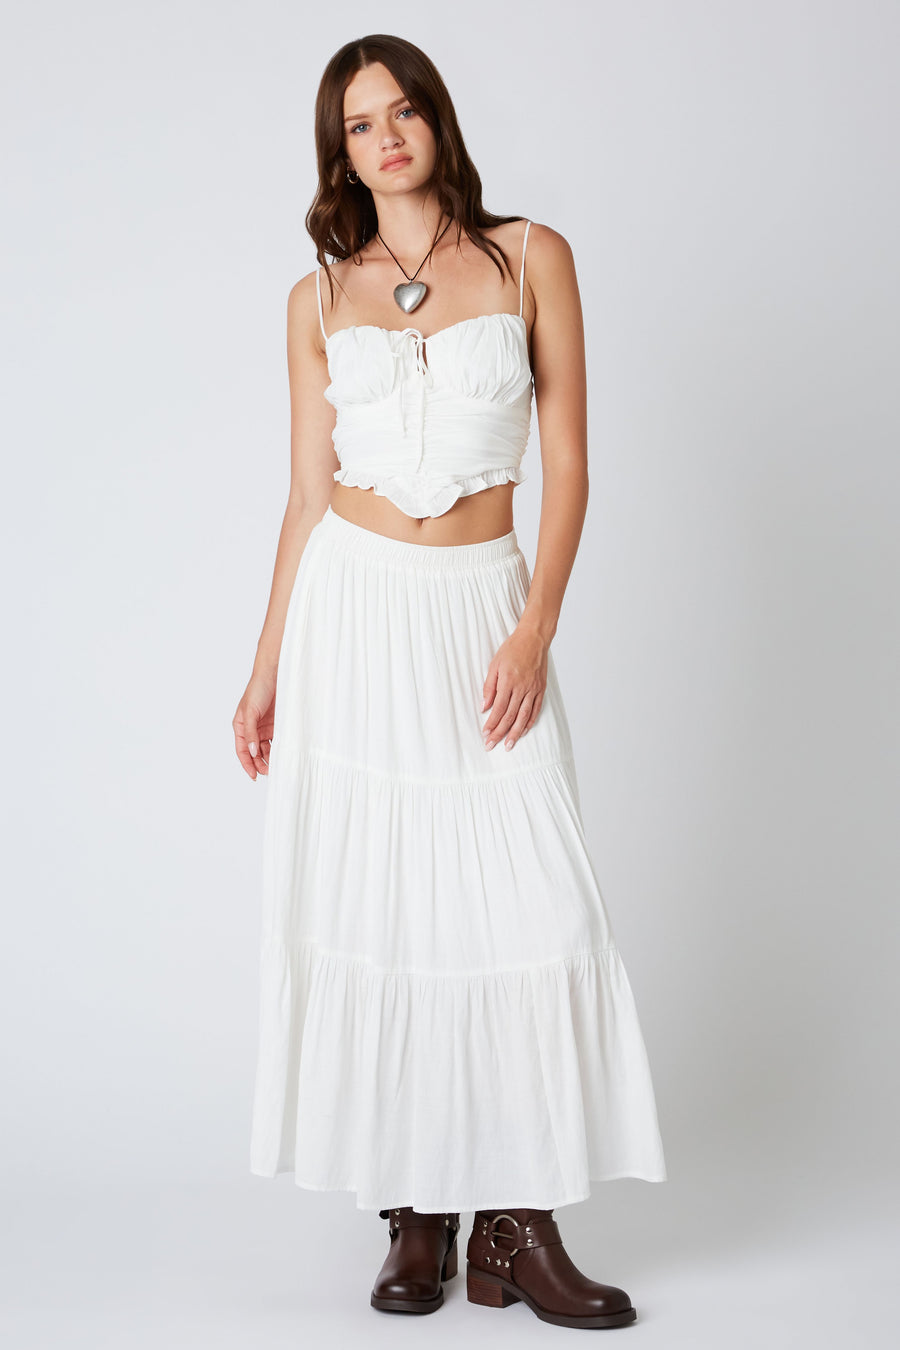 White maxi skirt with elastic waistband. 